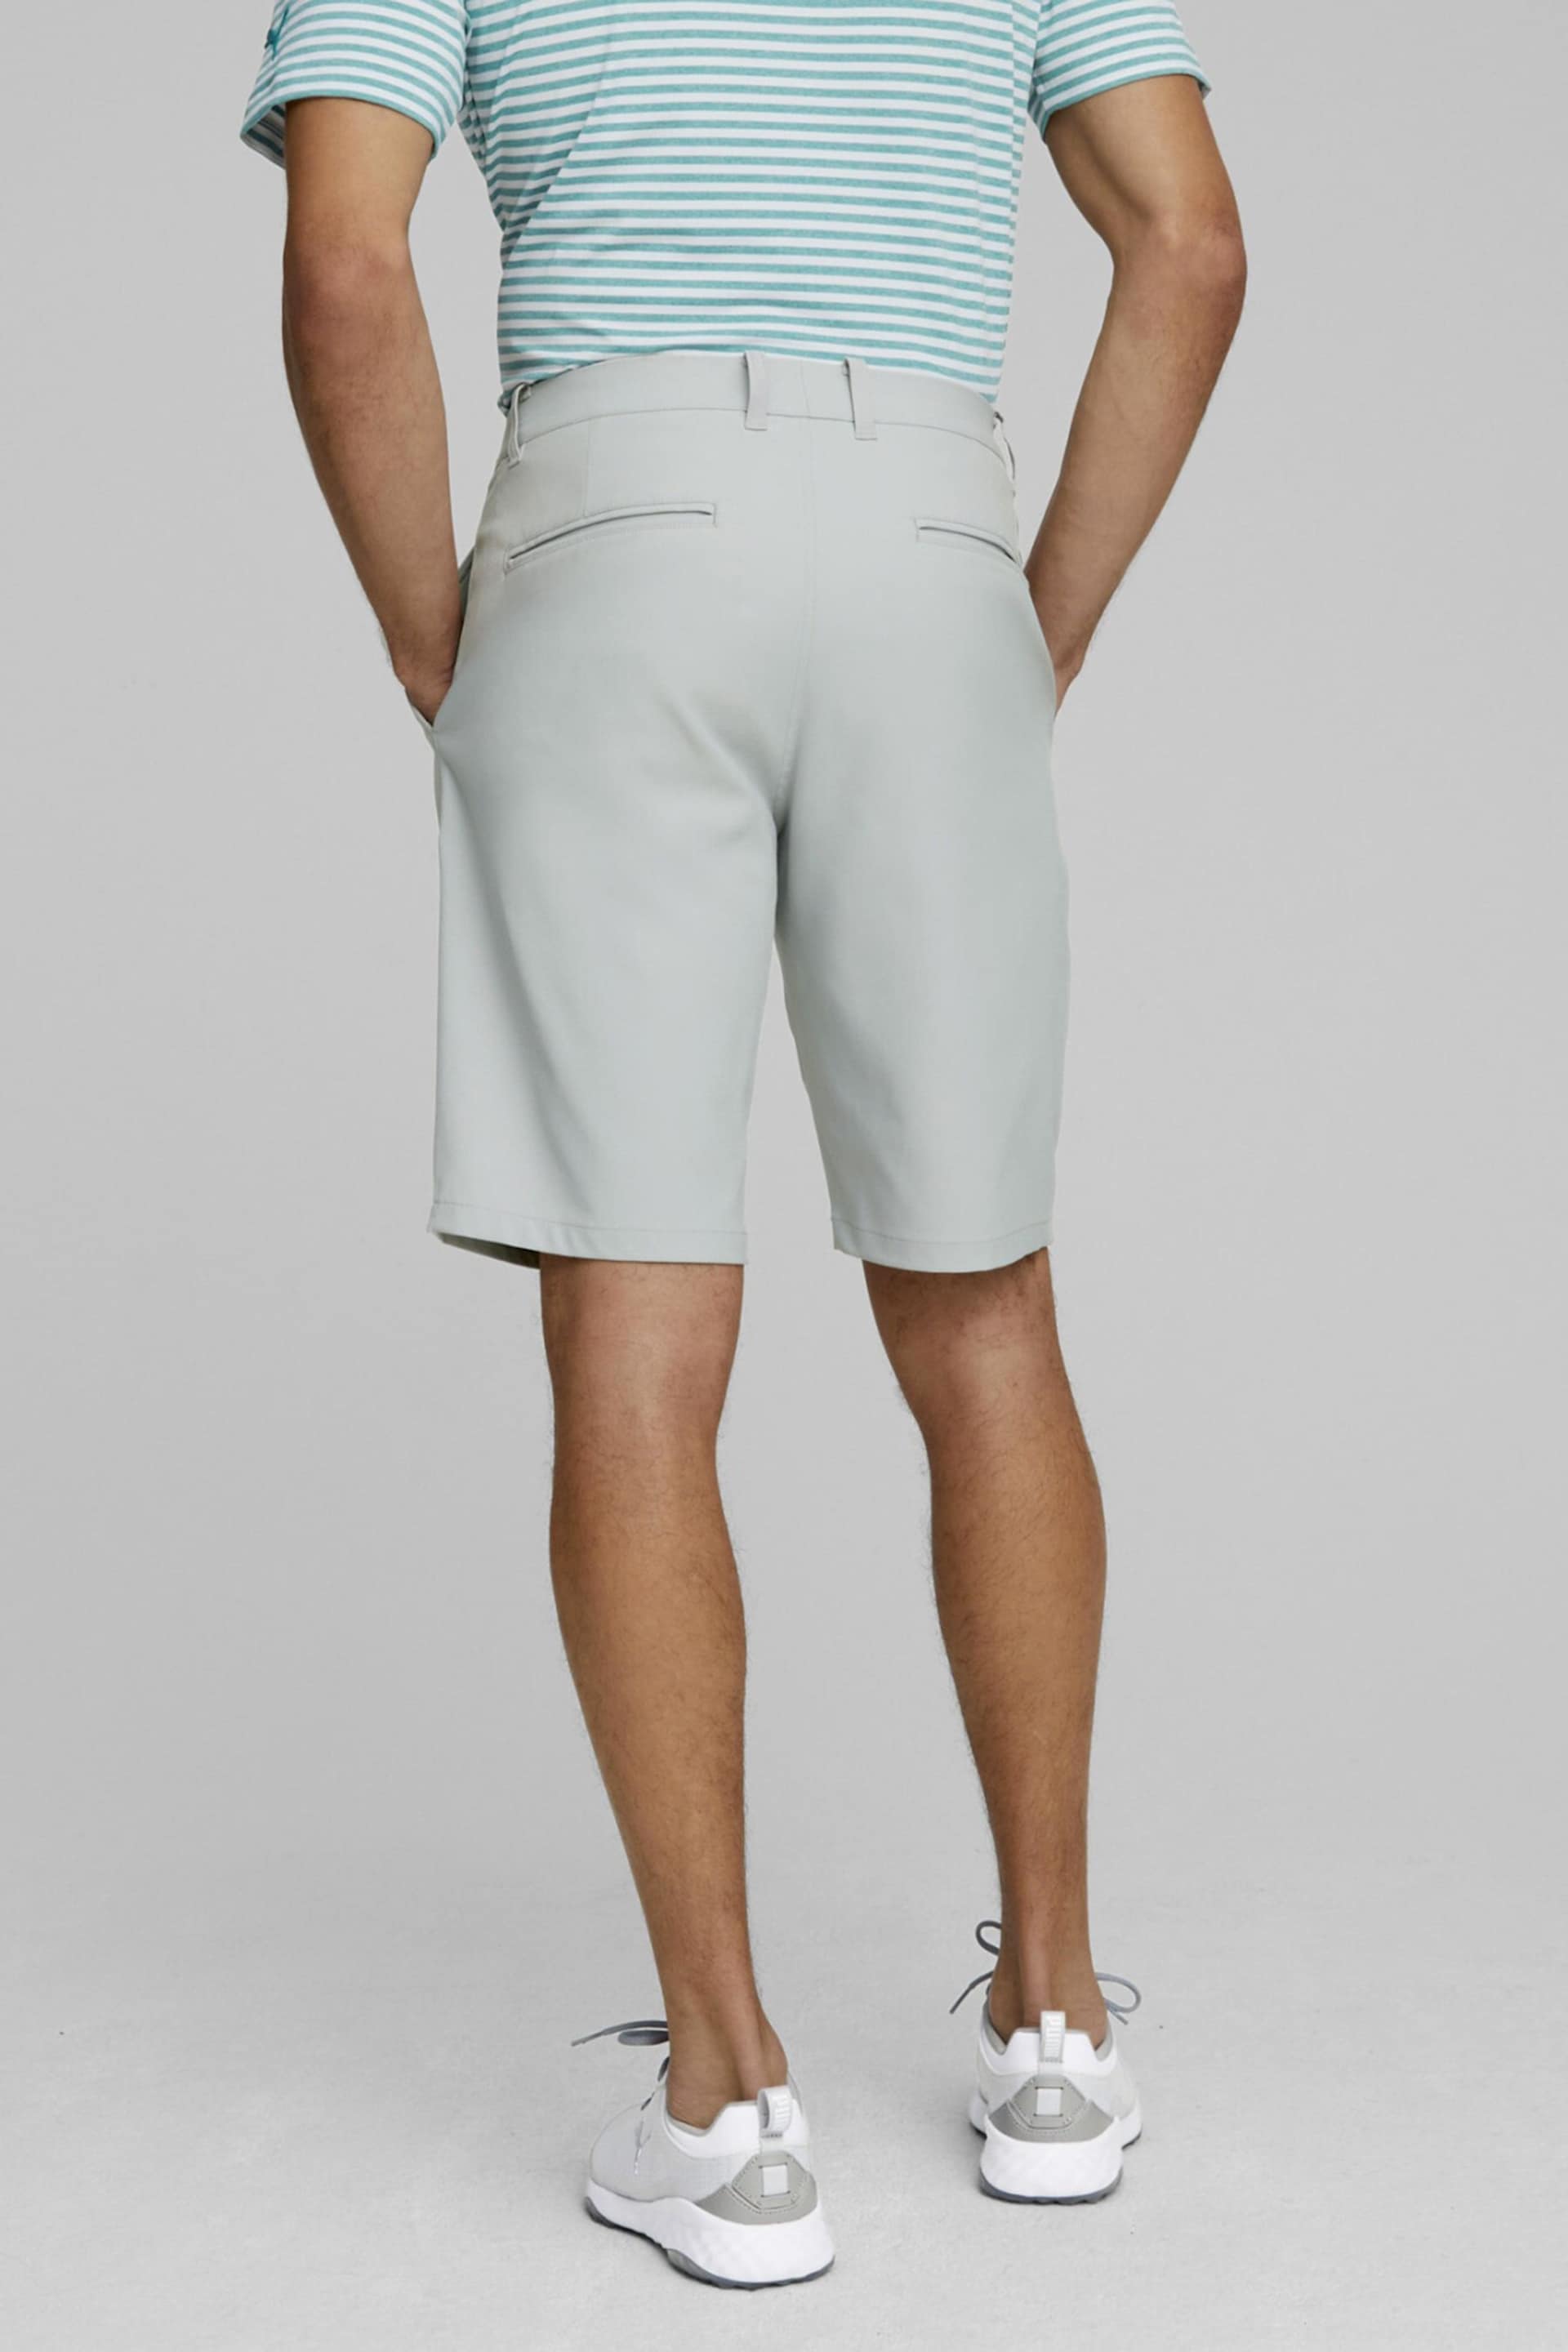 Puma Grey Dealer 10" Mens Golf Shorts - Image 2 of 5